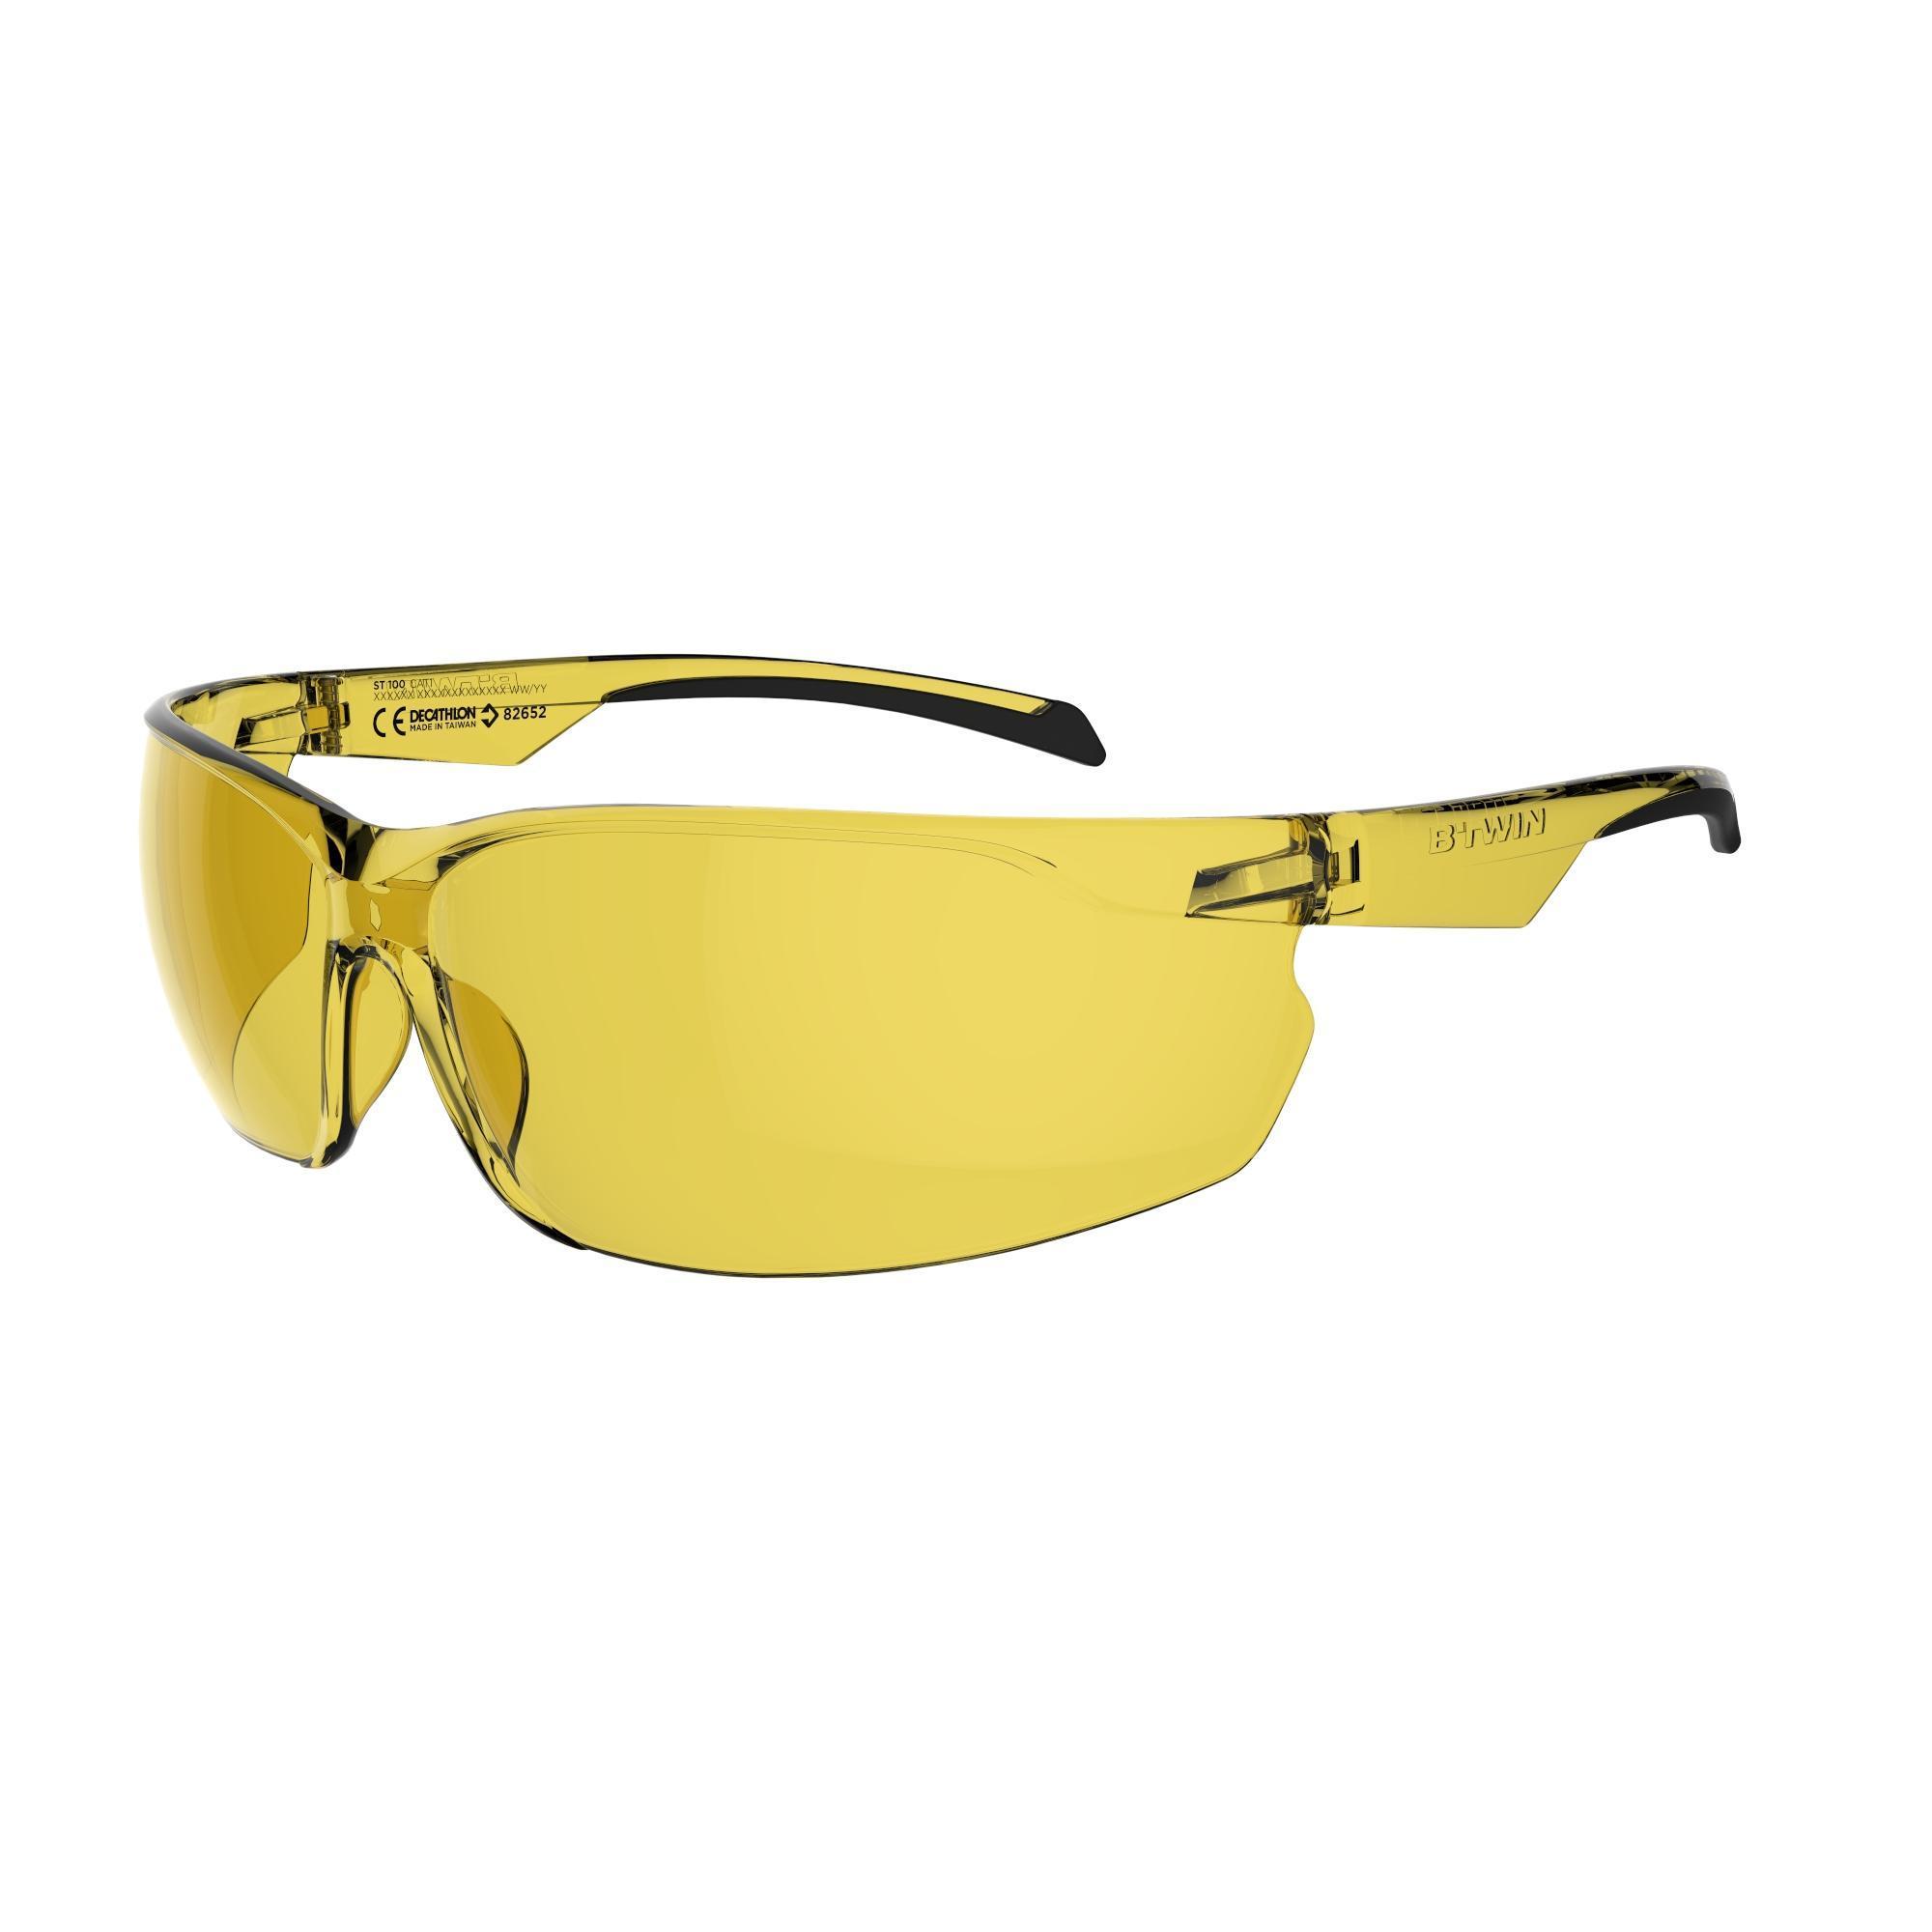 Adult sport sunglasses - Decathlon